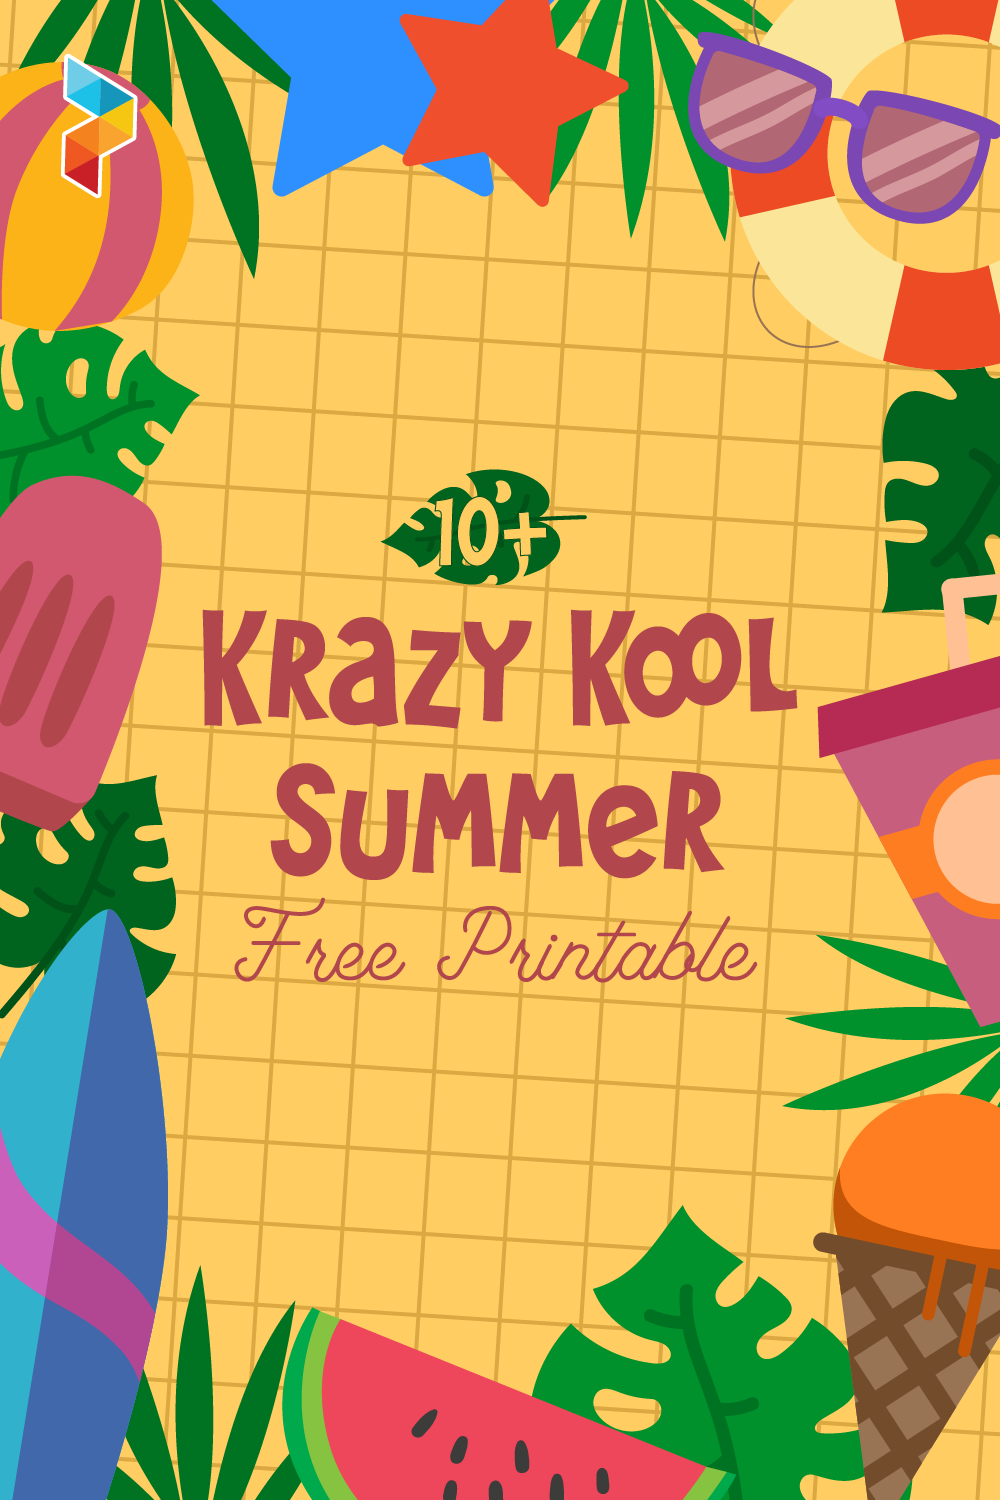 Krazy Kool Summer